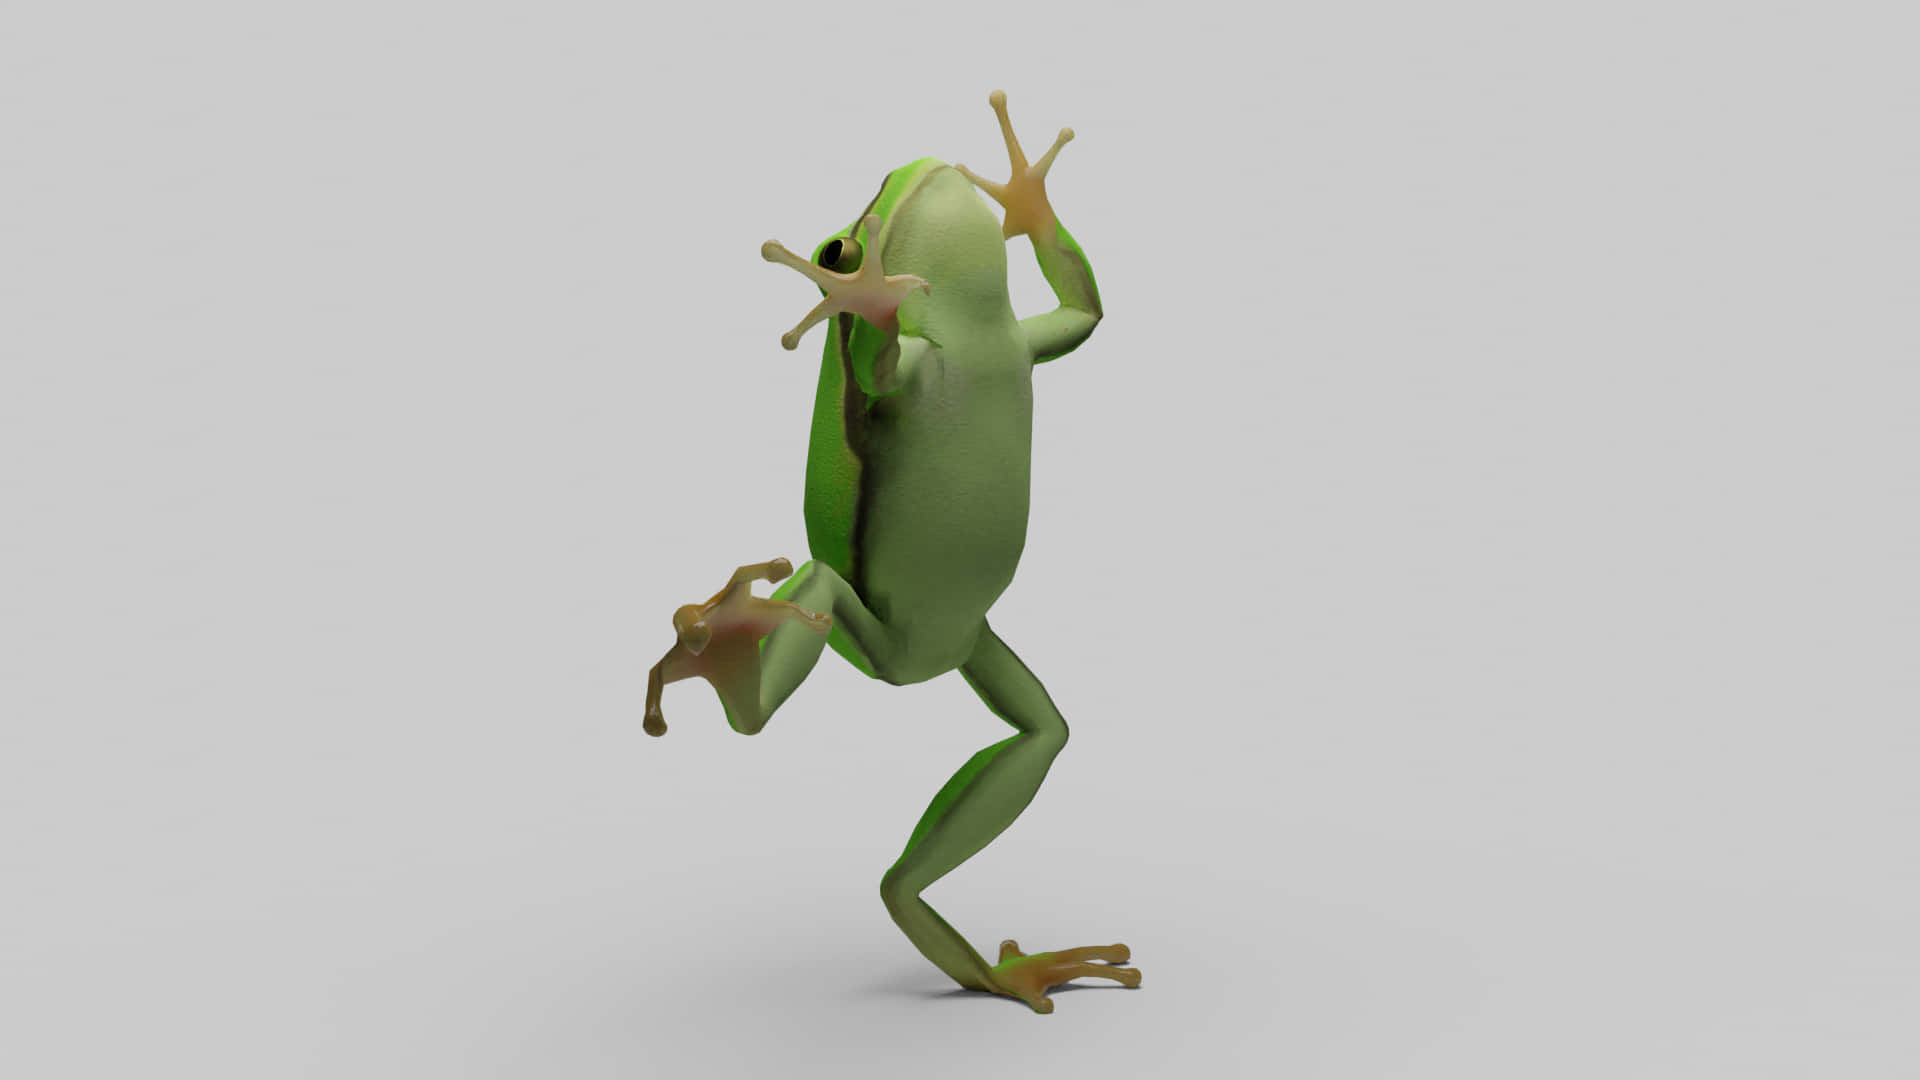 Dancing Frog Illustration Wallpaper